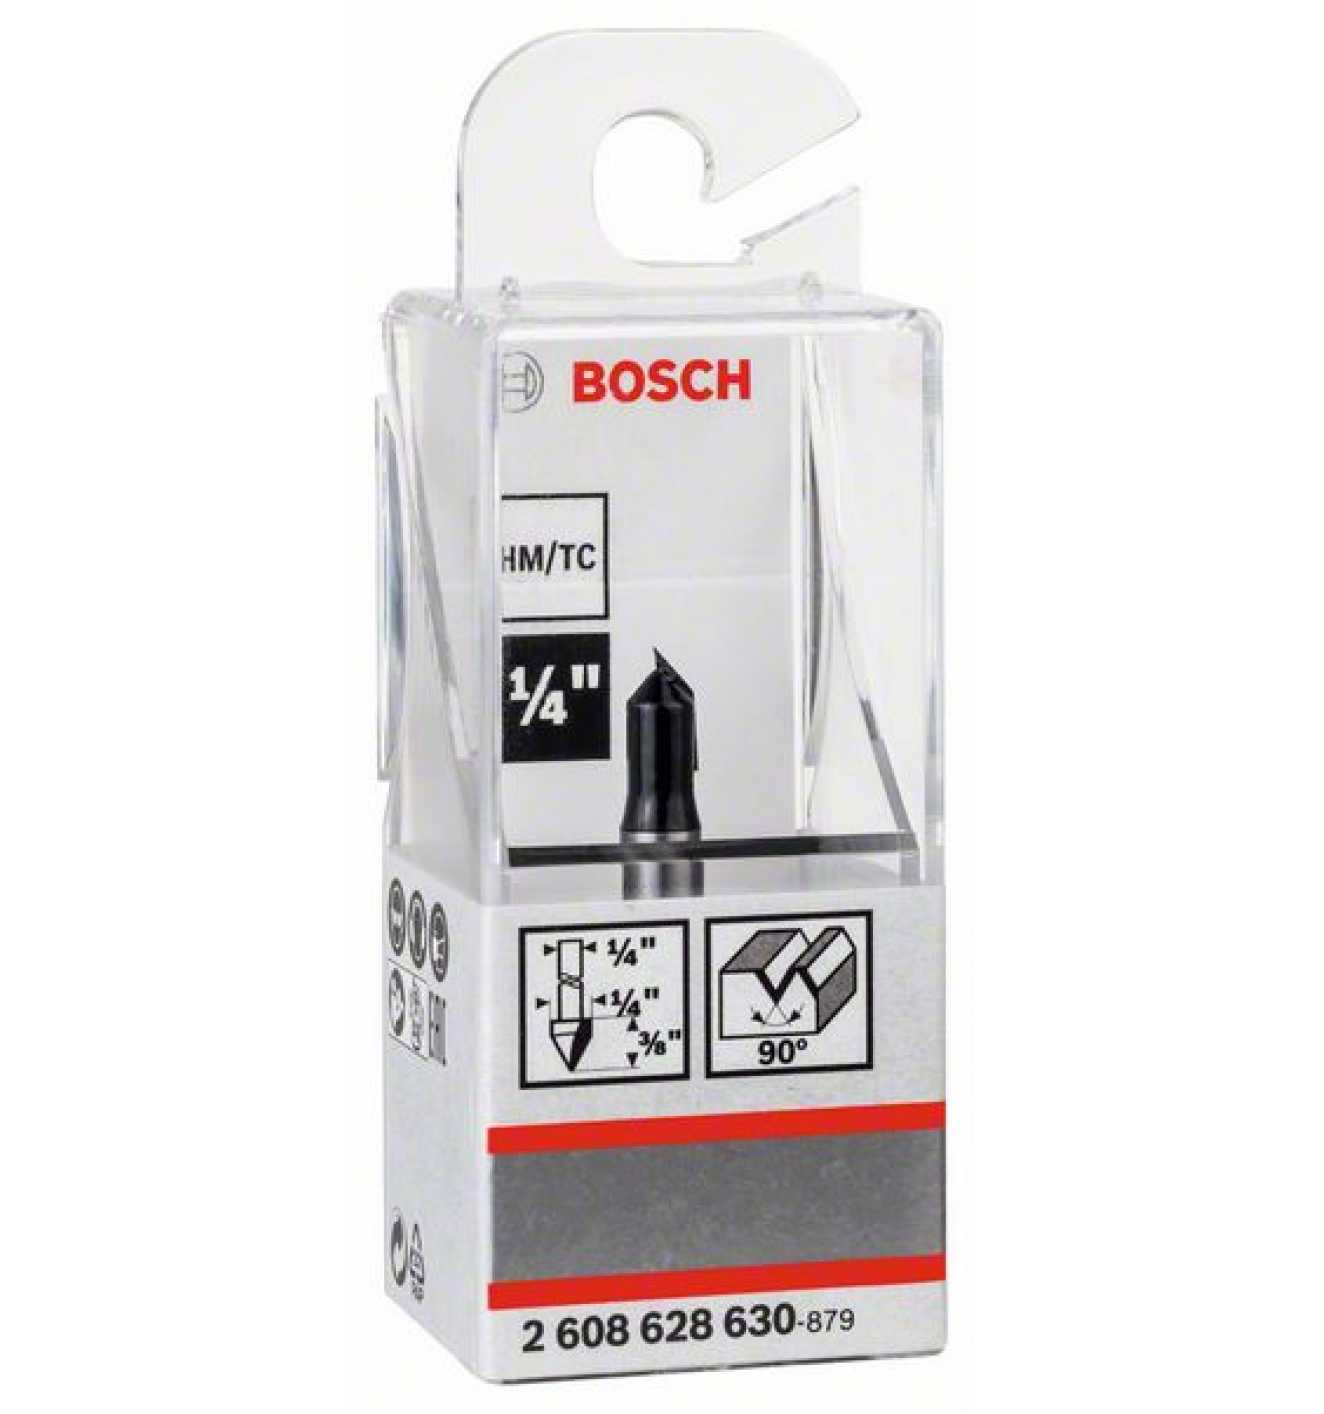 Bosch V-groove bit, 1/4", D1 6.3 mm, L 9.2 mm, G 45 mm, 90° 2608628630 Power Tool Services